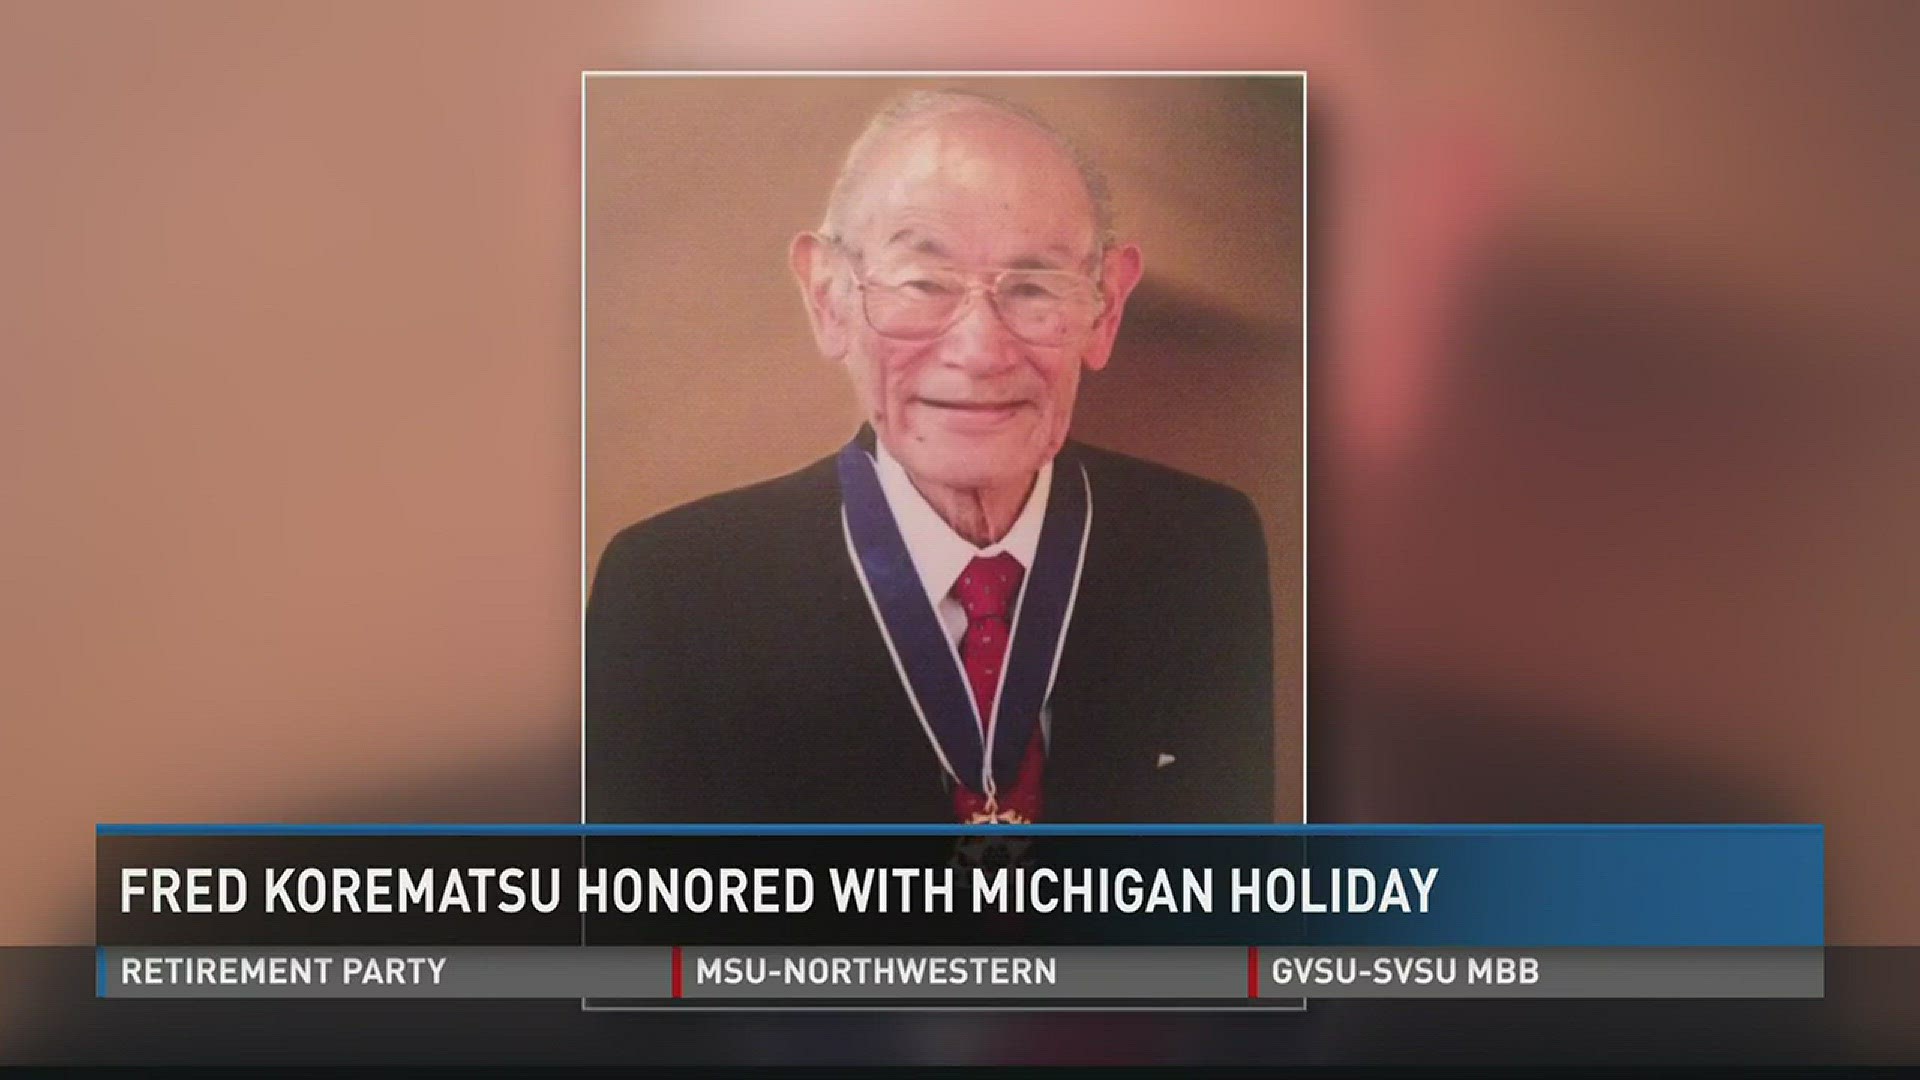 Fred Korematsu honored with Michigan holiday